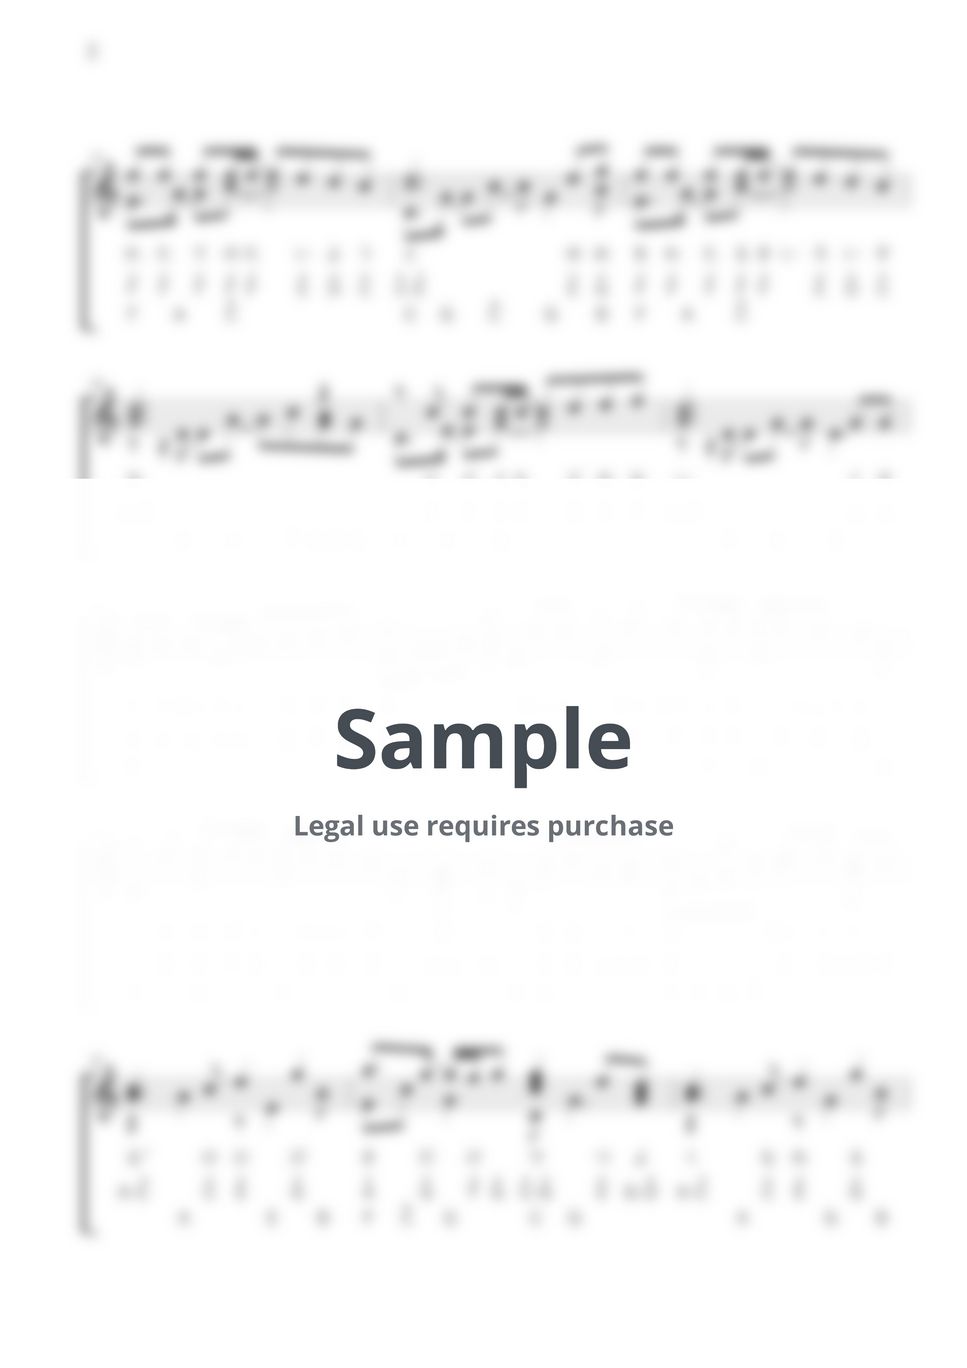 Spitz - Cherry / 17 keys kalimba / Letter Notation by Misa / Kalimba Music